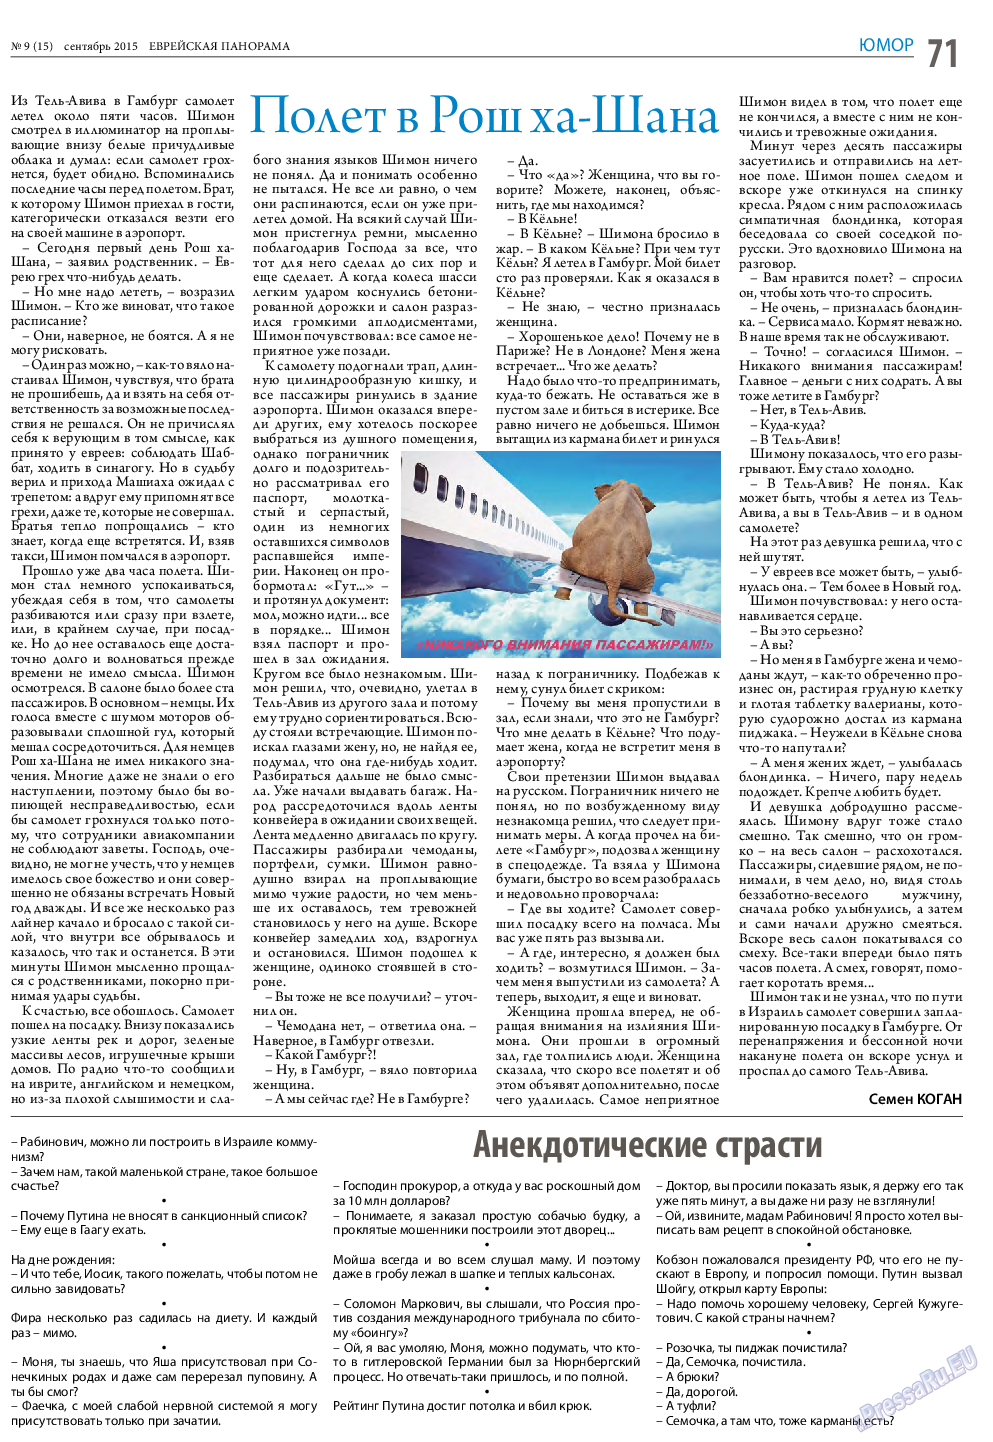 Еврейская панорама, газета. 2015 №9 стр.71